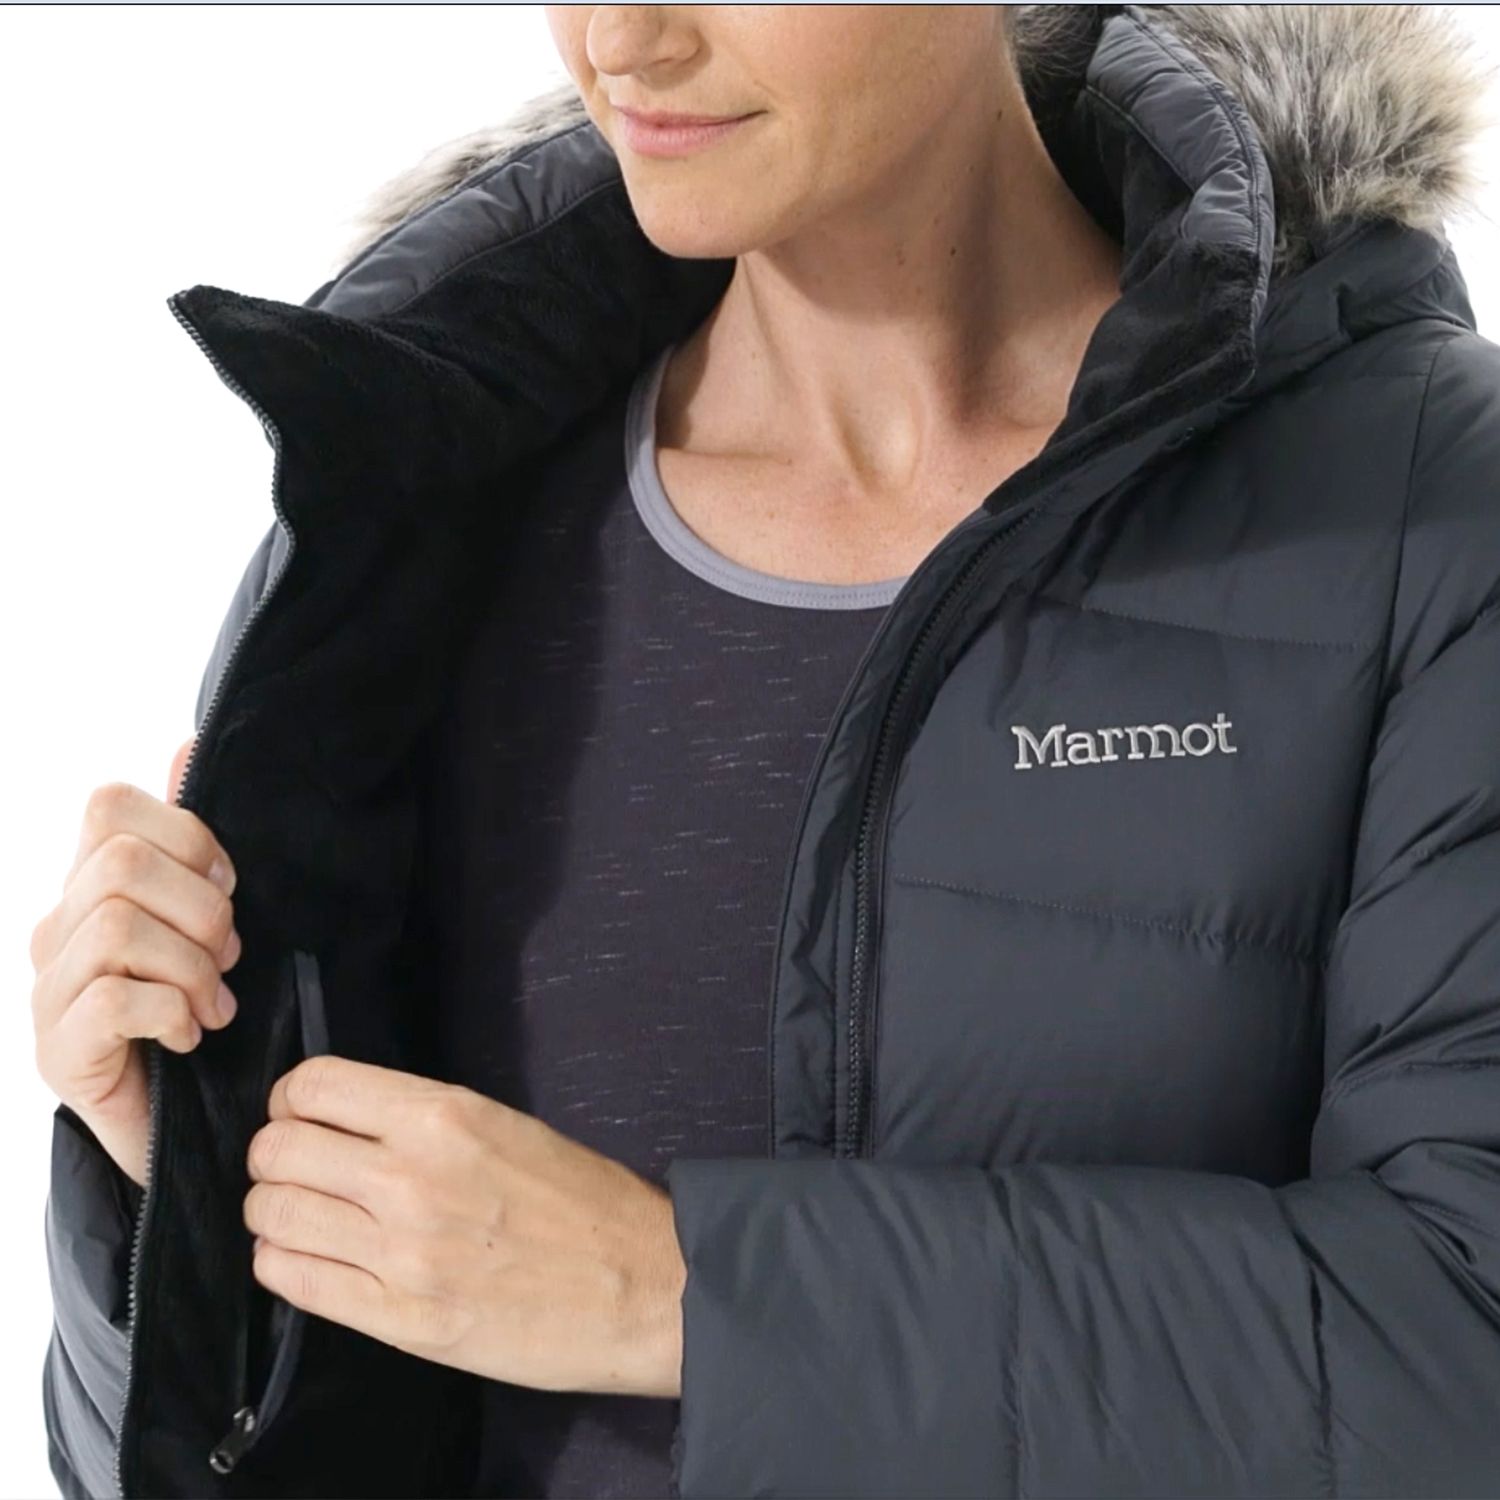 marmot jacket with fur hood